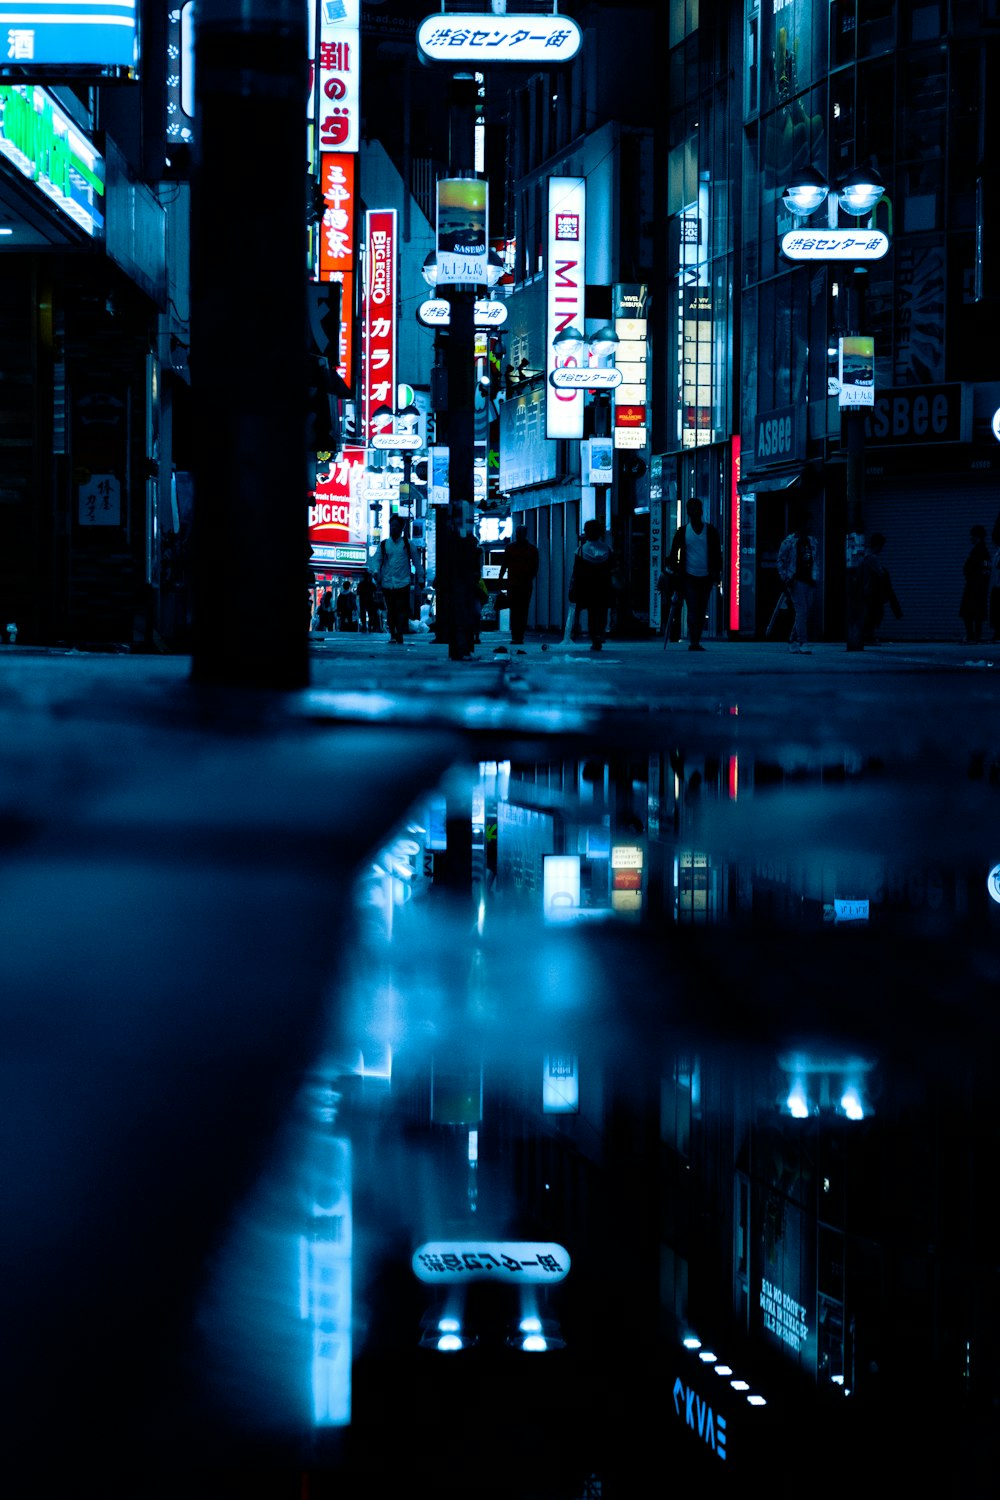 reflection of city night lights